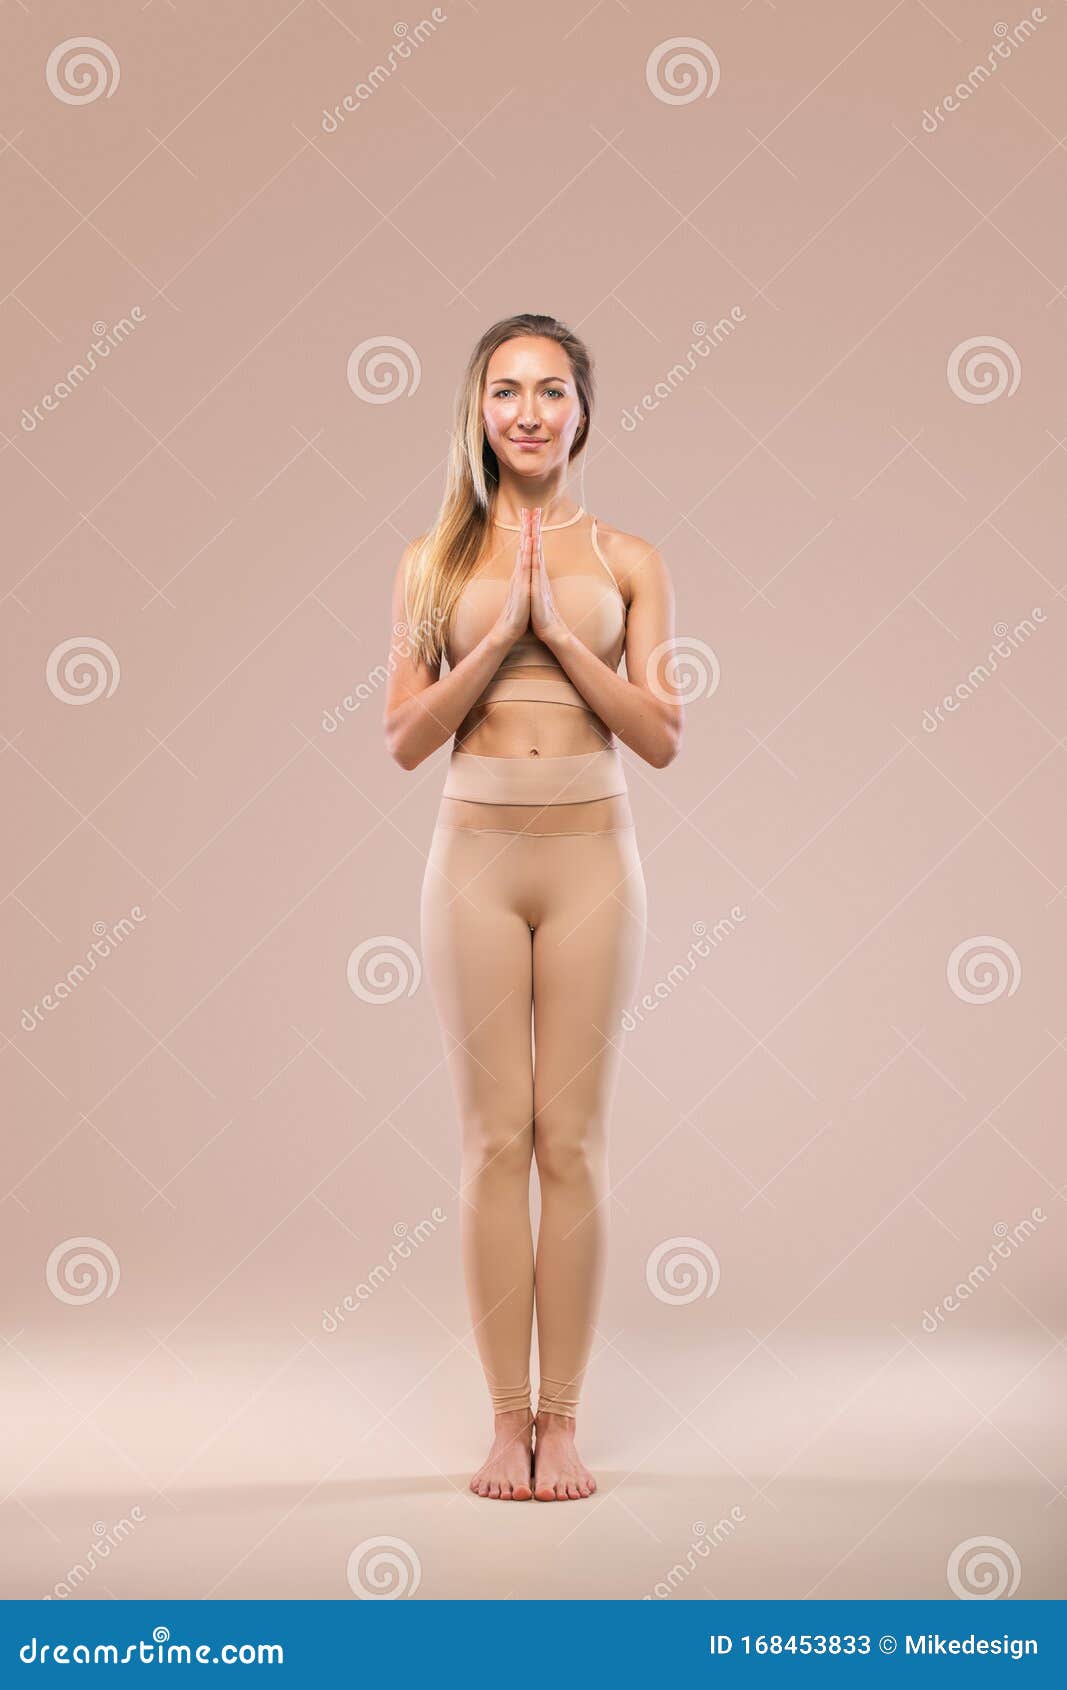 Beautiful nudist